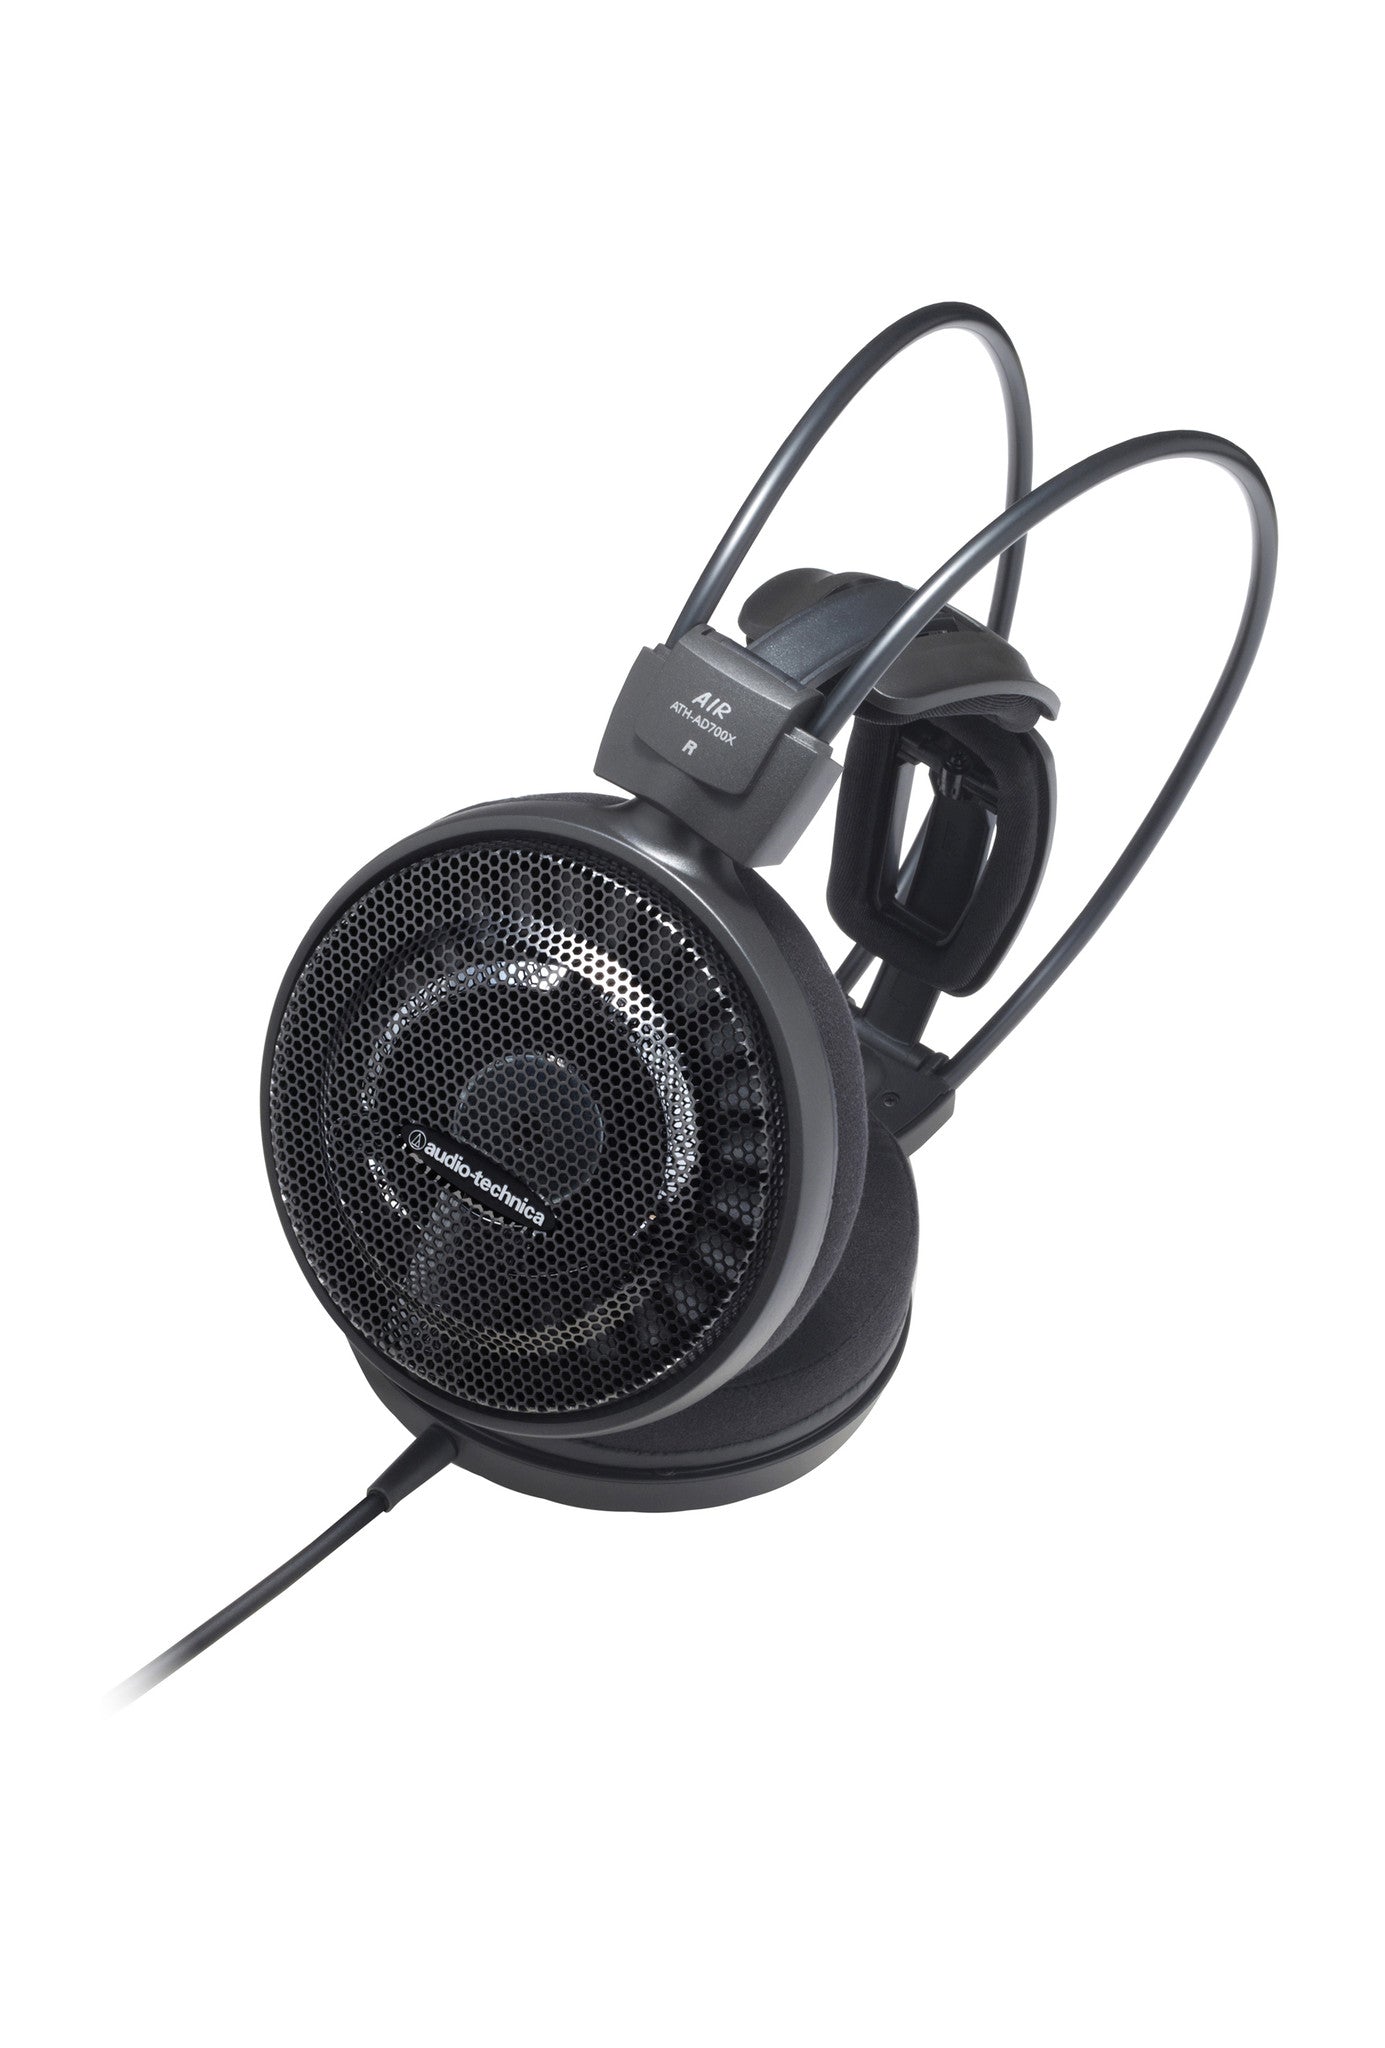 Audio Technica ATH-AD1000x Audiophile Open-Air Dynamic Headphone